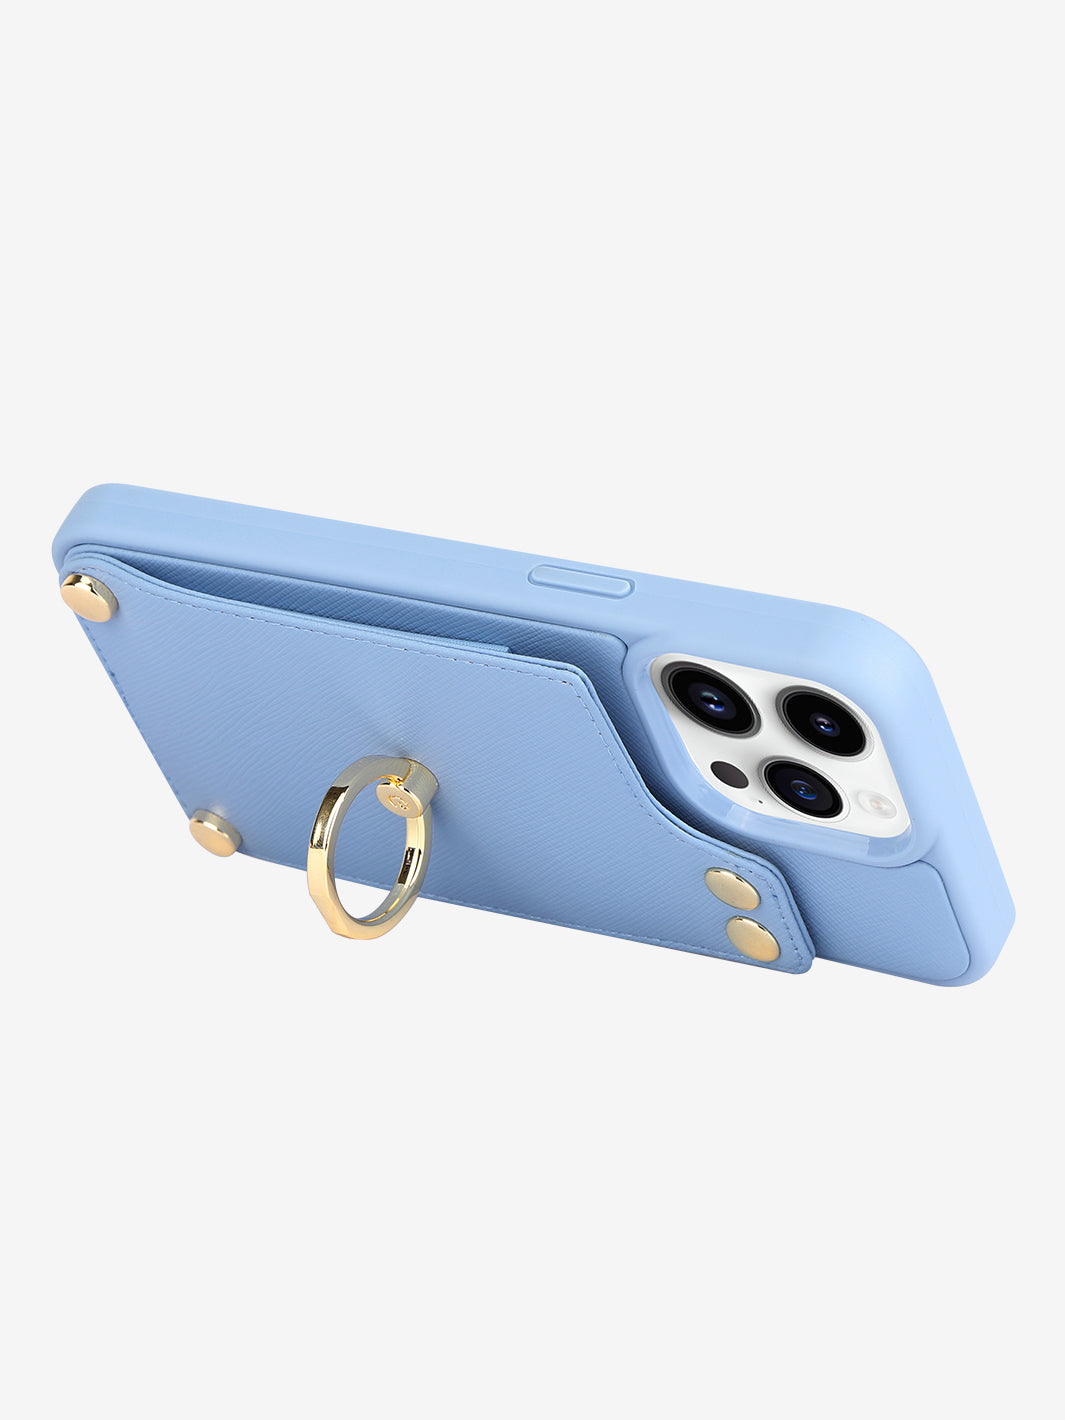 StandEase- Ring Holder Phone Case-blue